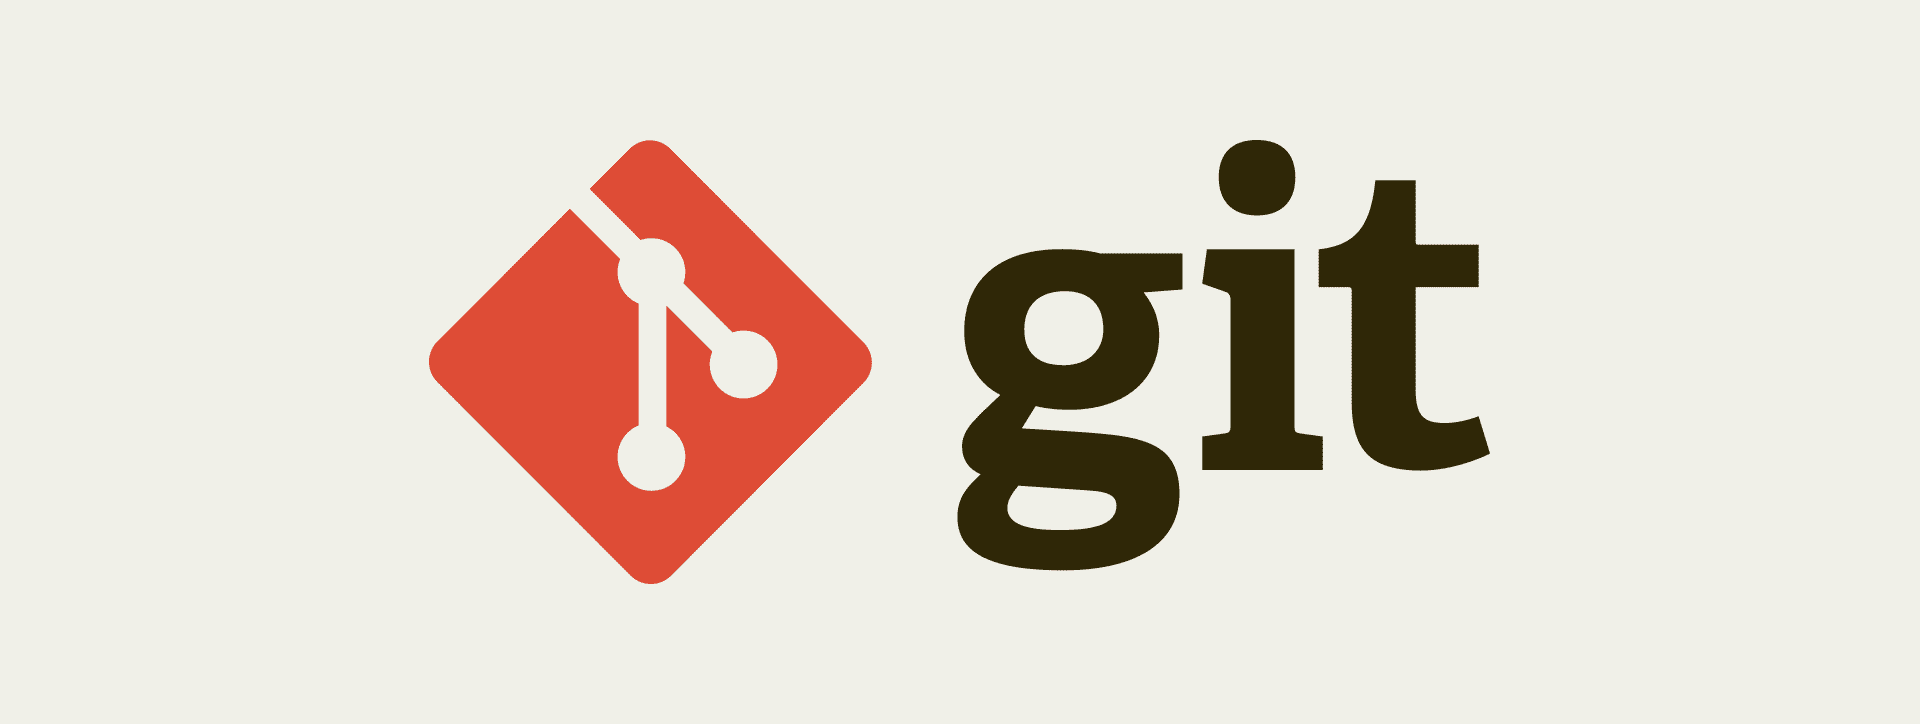 Git useful commands, code management